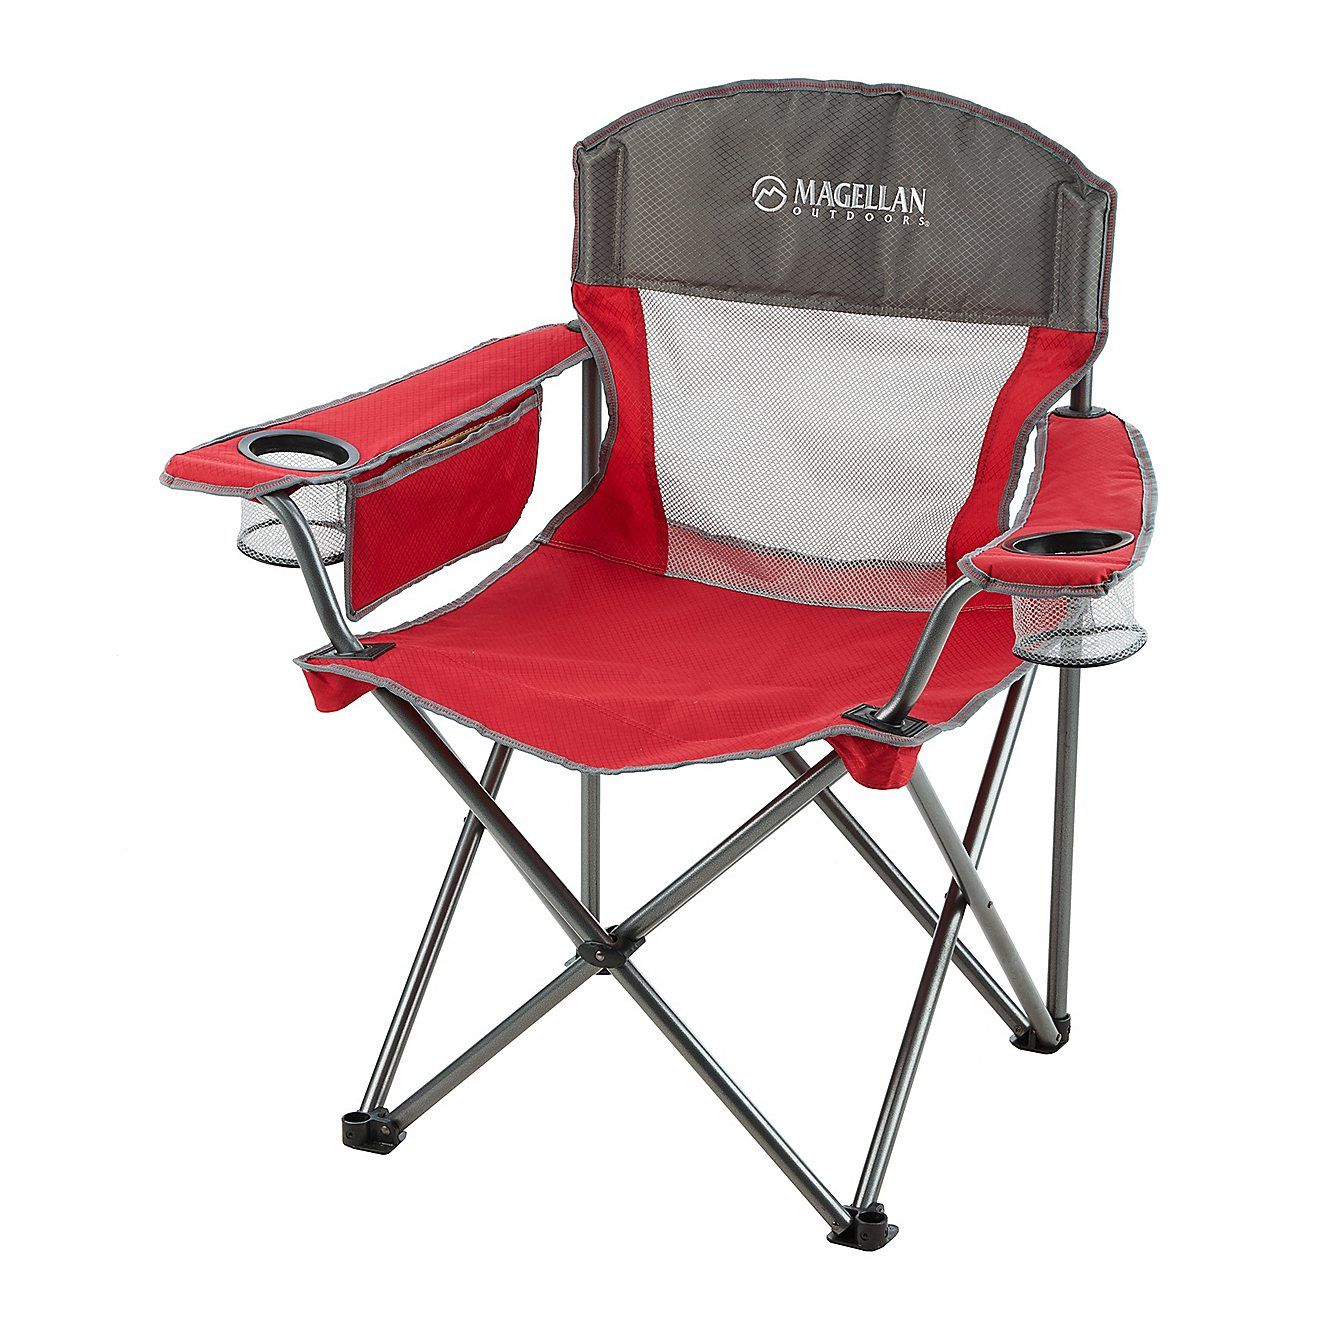 Magellan Outdoors Cool Comfort Mesh Chair | Academy | Academy Sports + Outdoors